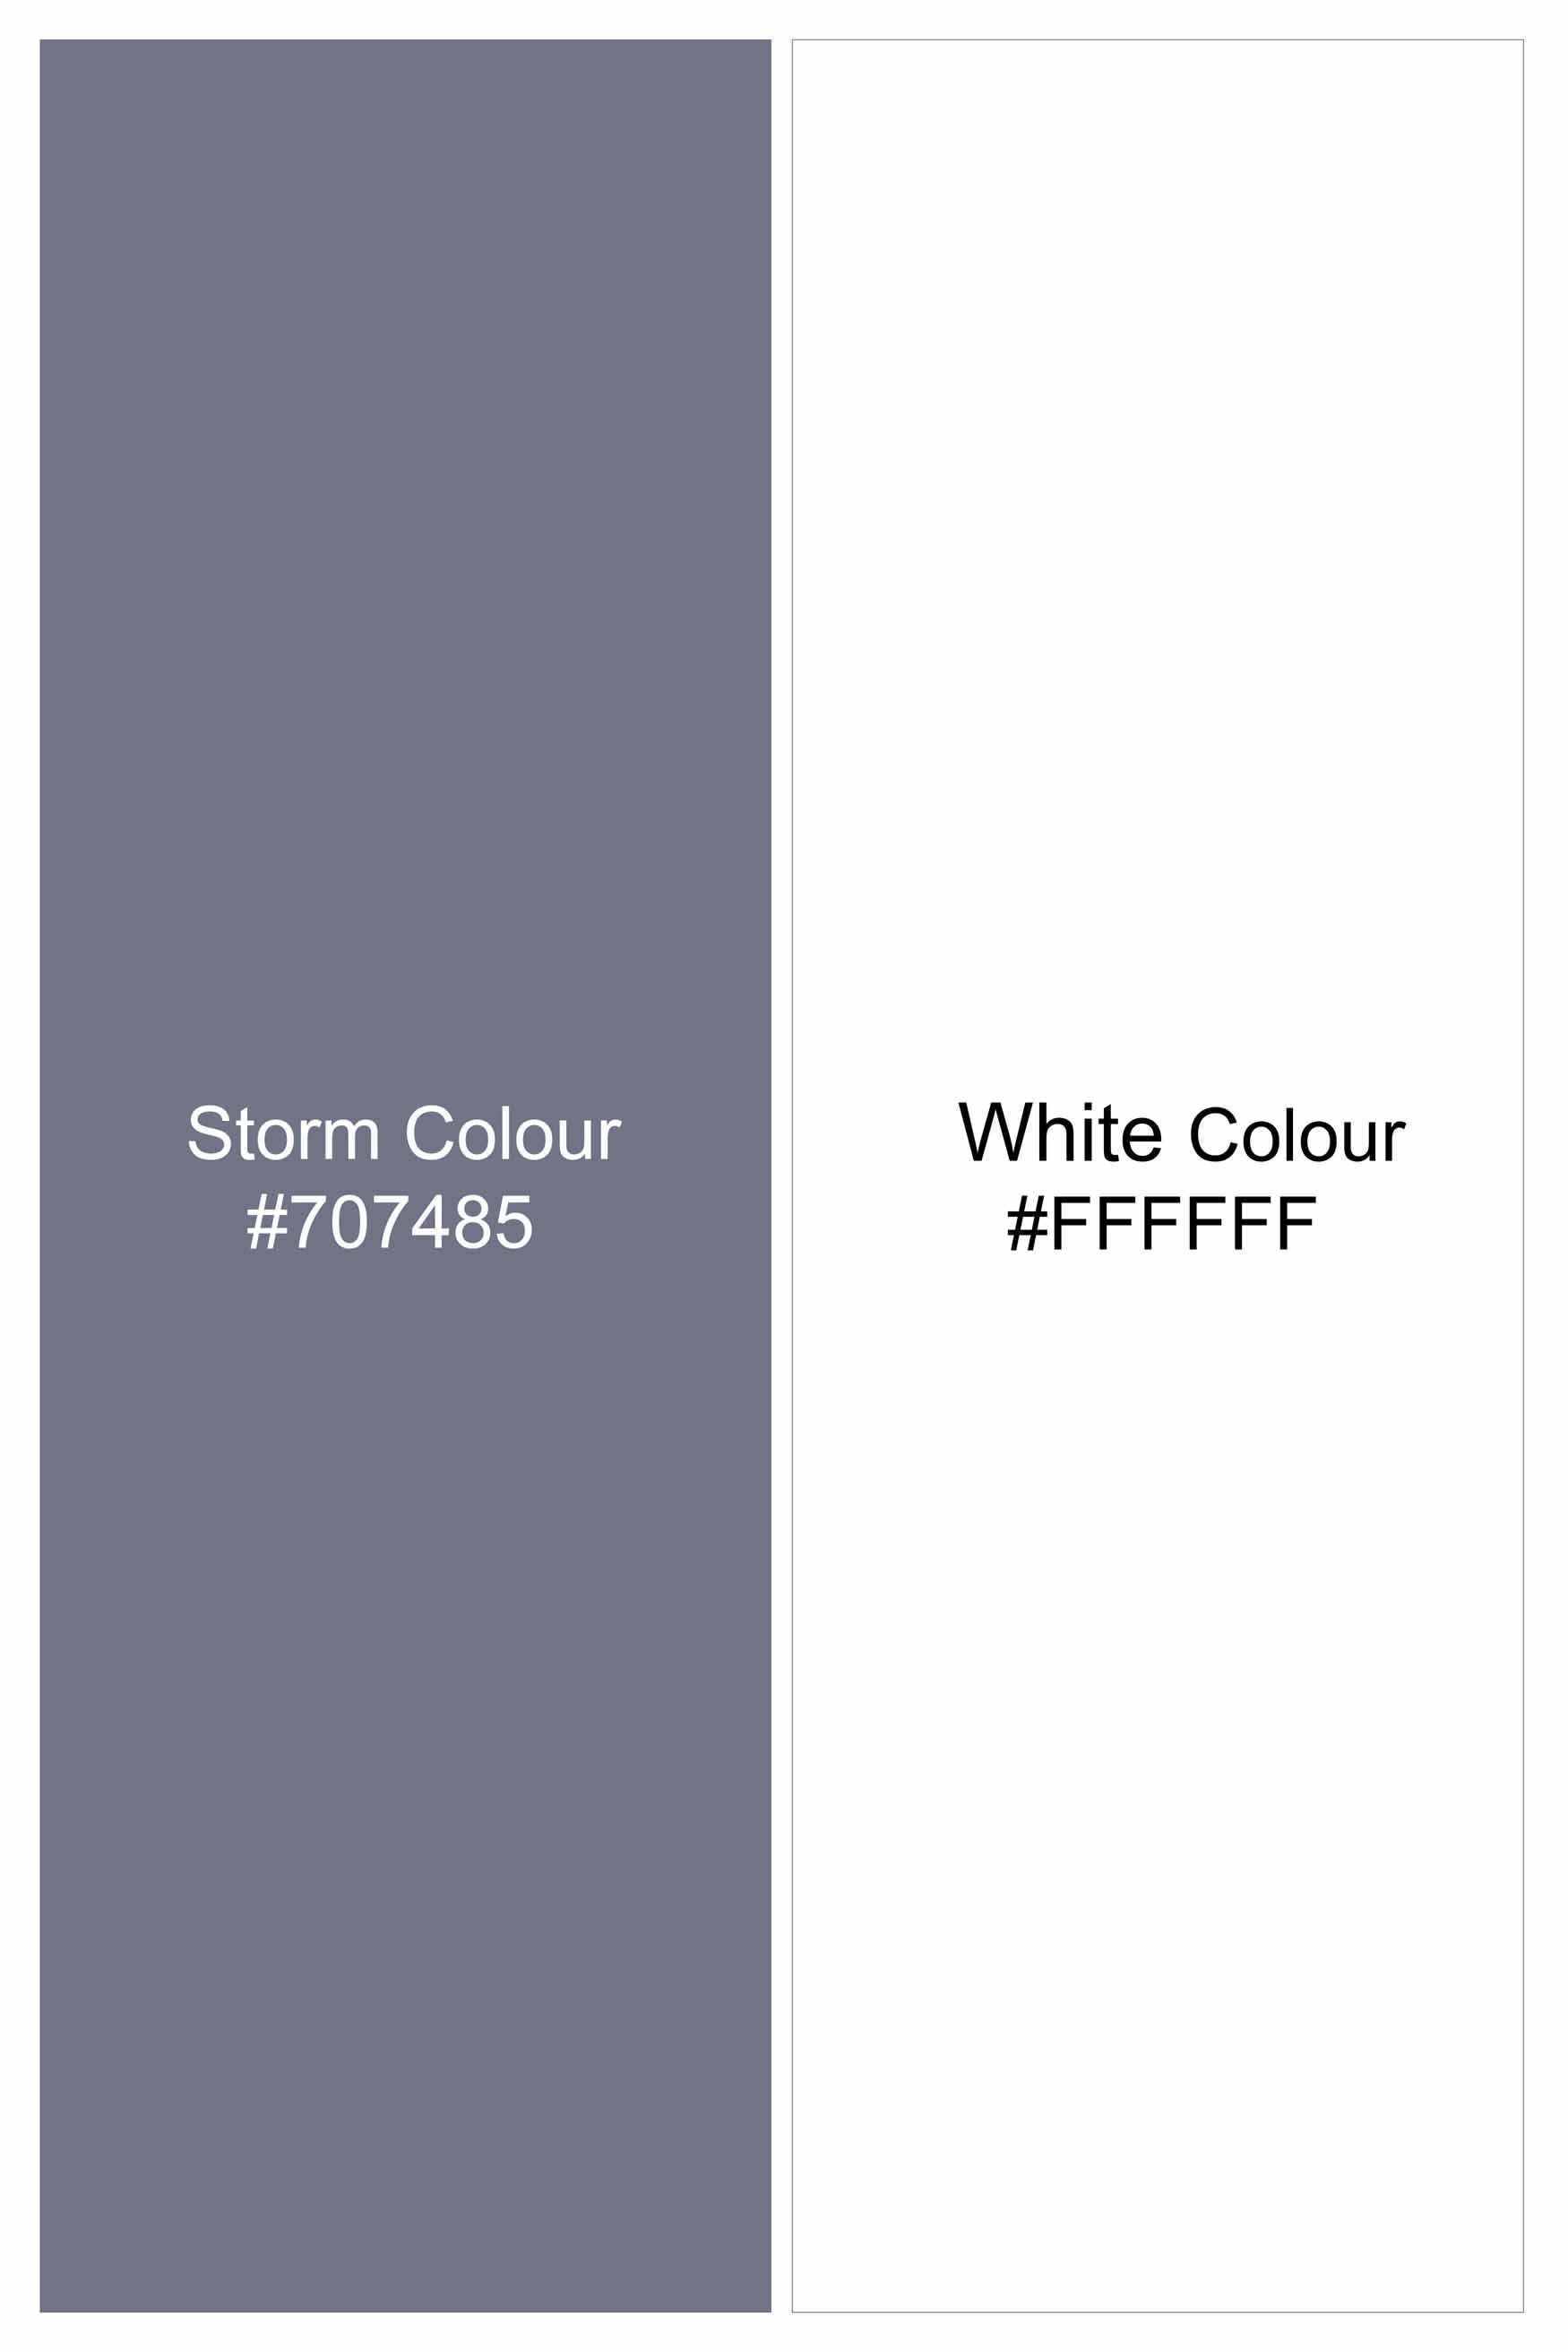 Storm Gray and Bright White Striped Twill Premium Cotton Shirt 11440-CA-BLK-38, 11440-CA-BLK-H-38, 11440-CA-BLK-39, 11440-CA-BLK-H-39, 11440-CA-BLK-40, 11440-CA-BLK-H-40, 11440-CA-BLK-42, 11440-CA-BLK-H-42, 11440-CA-BLK-44, 11440-CA-BLK-H-44, 11440-CA-BLK-46, 11440-CA-BLK-H-46, 11440-CA-BLK-48, 11440-CA-BLK-H-48, 11440-CA-BLK-50, 11440-CA-BLK-H-50, 11440-CA-BLK-52, 11440-CA-BLK-H-52